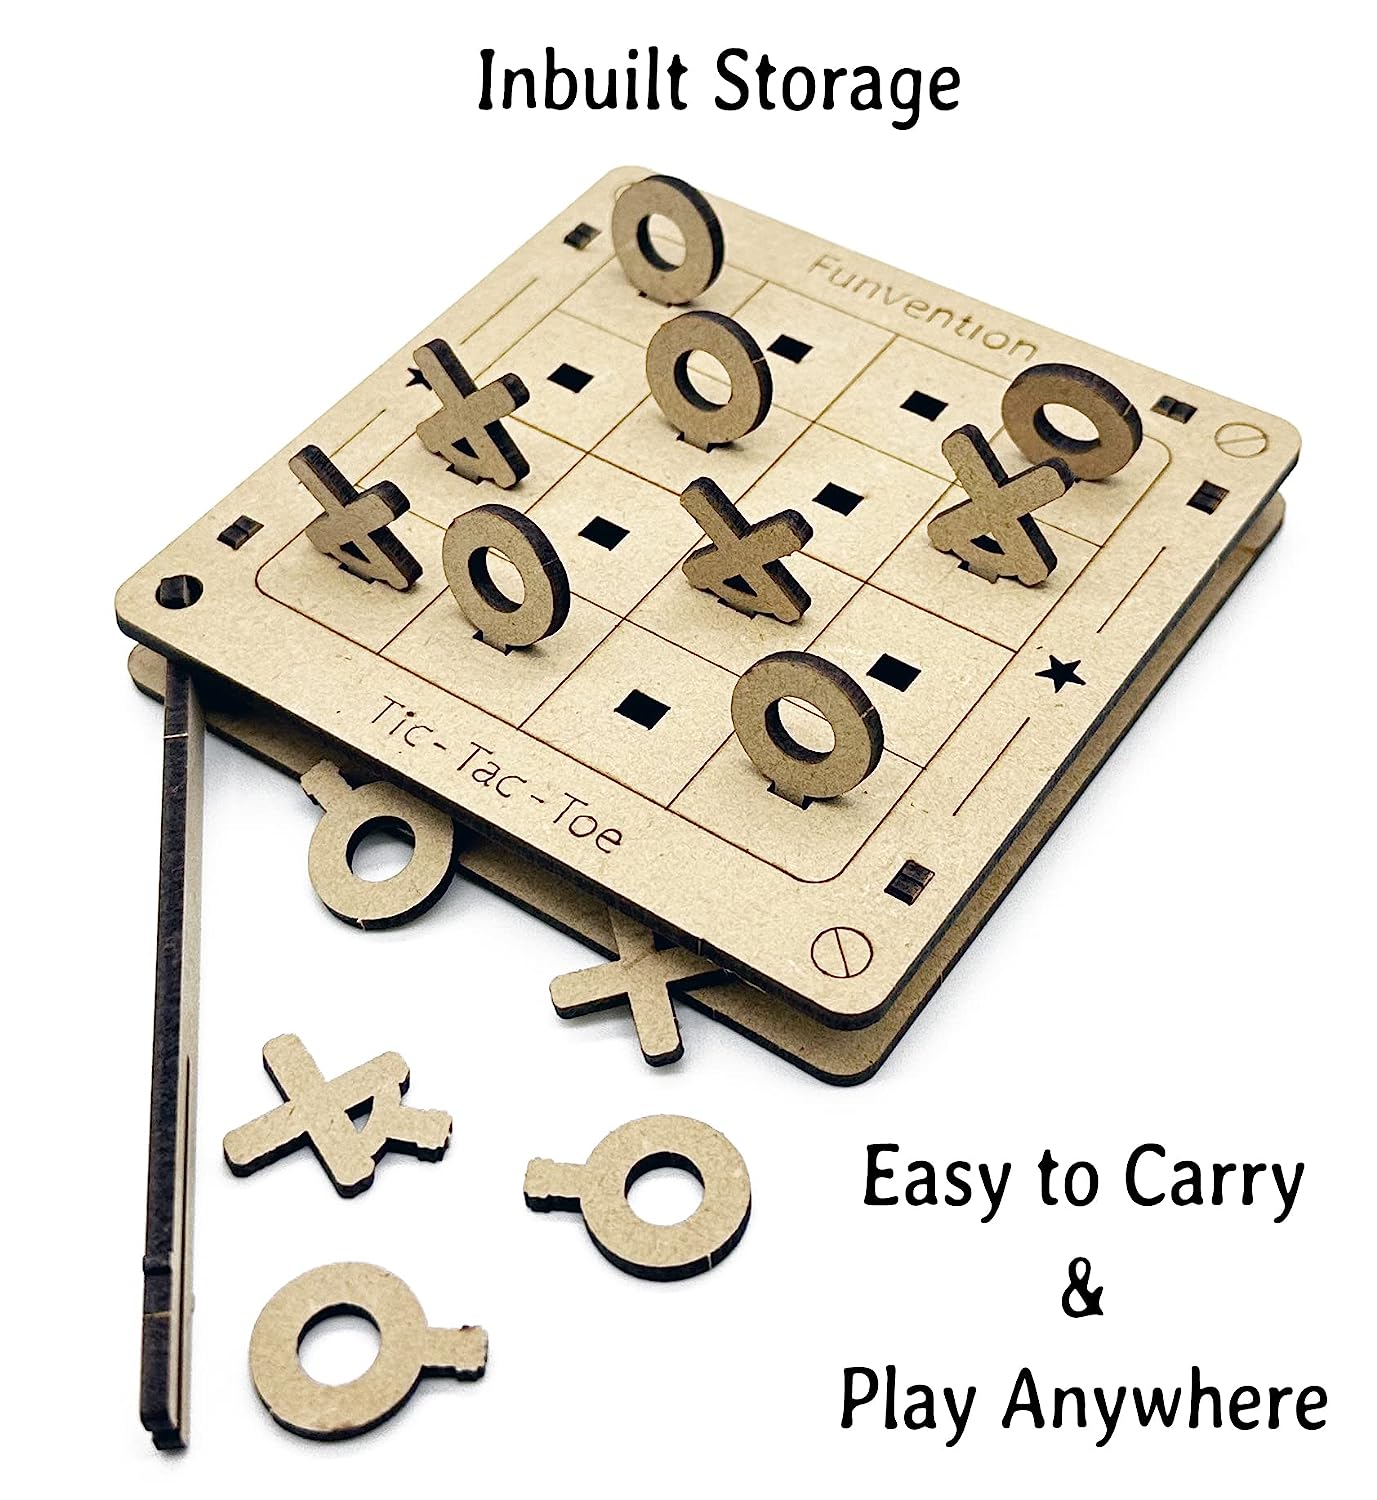 MM TOYS DIY Pocket Game Tic-Tac-Toe - Portable Dual Mode Board Game with Inbuilt Storage, Laser Cut MDF Parts, Ideal for Kids